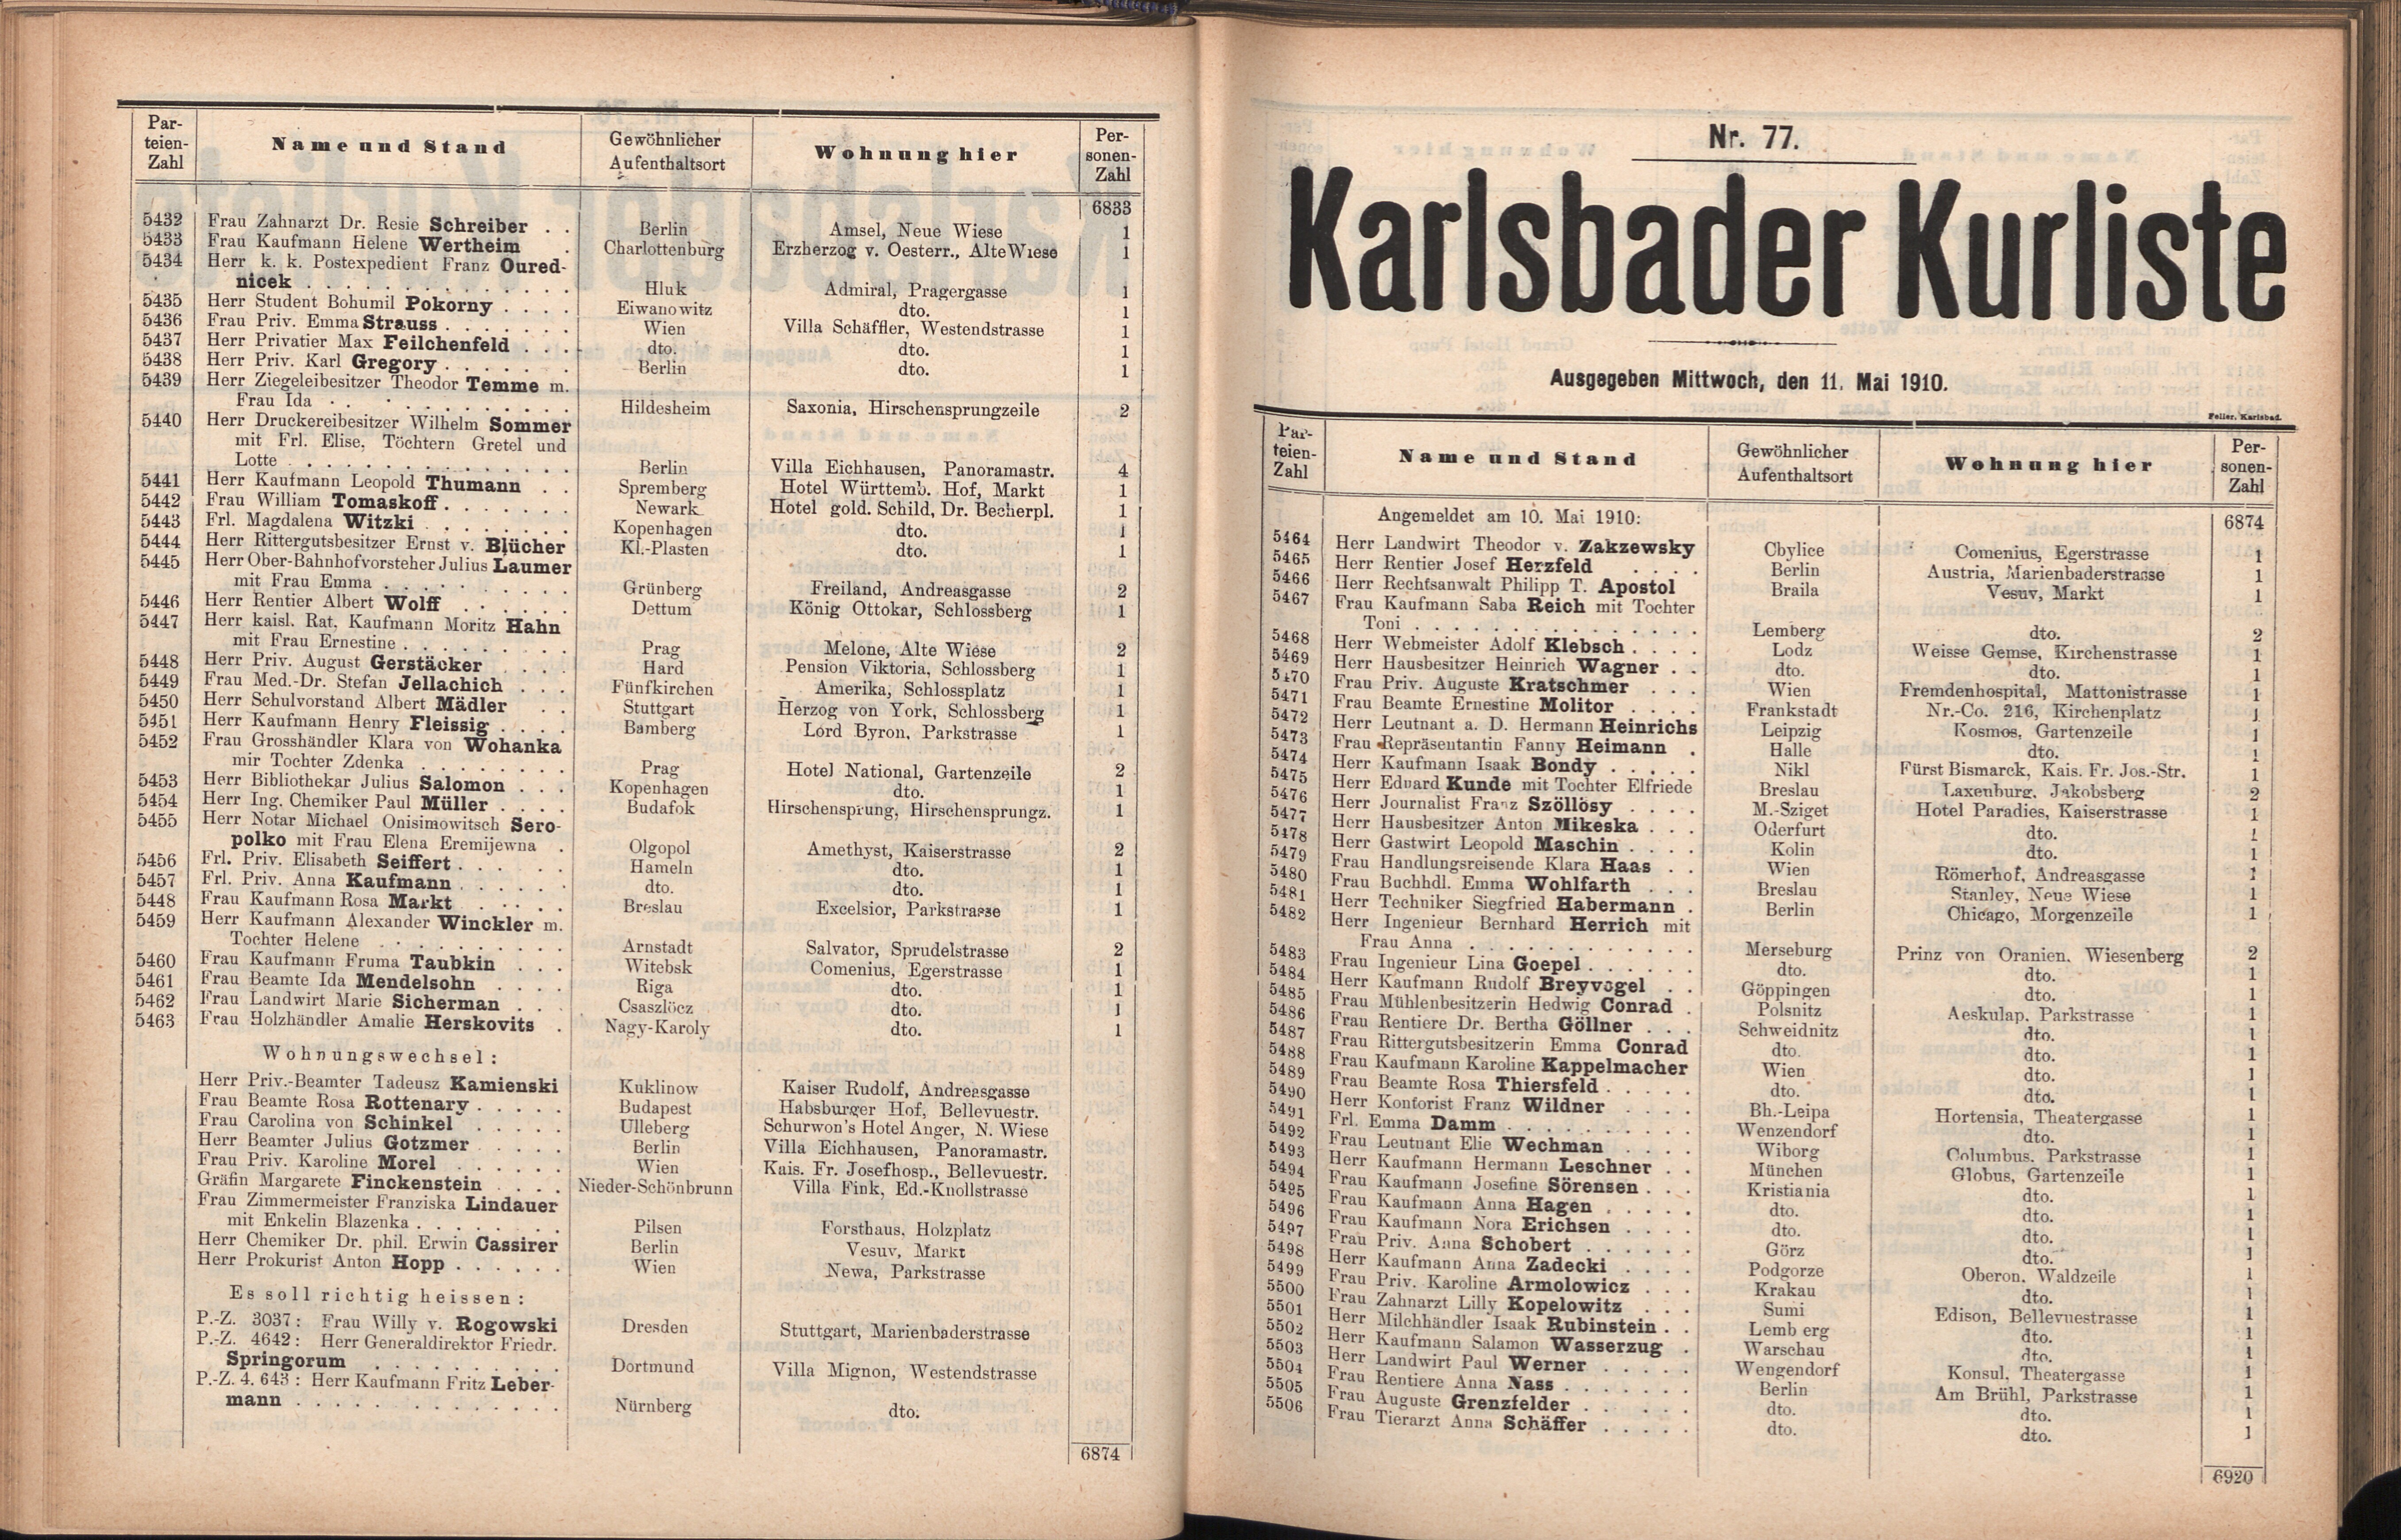 198. soap-kv_knihovna_karlsbader-kurliste-1910_1980